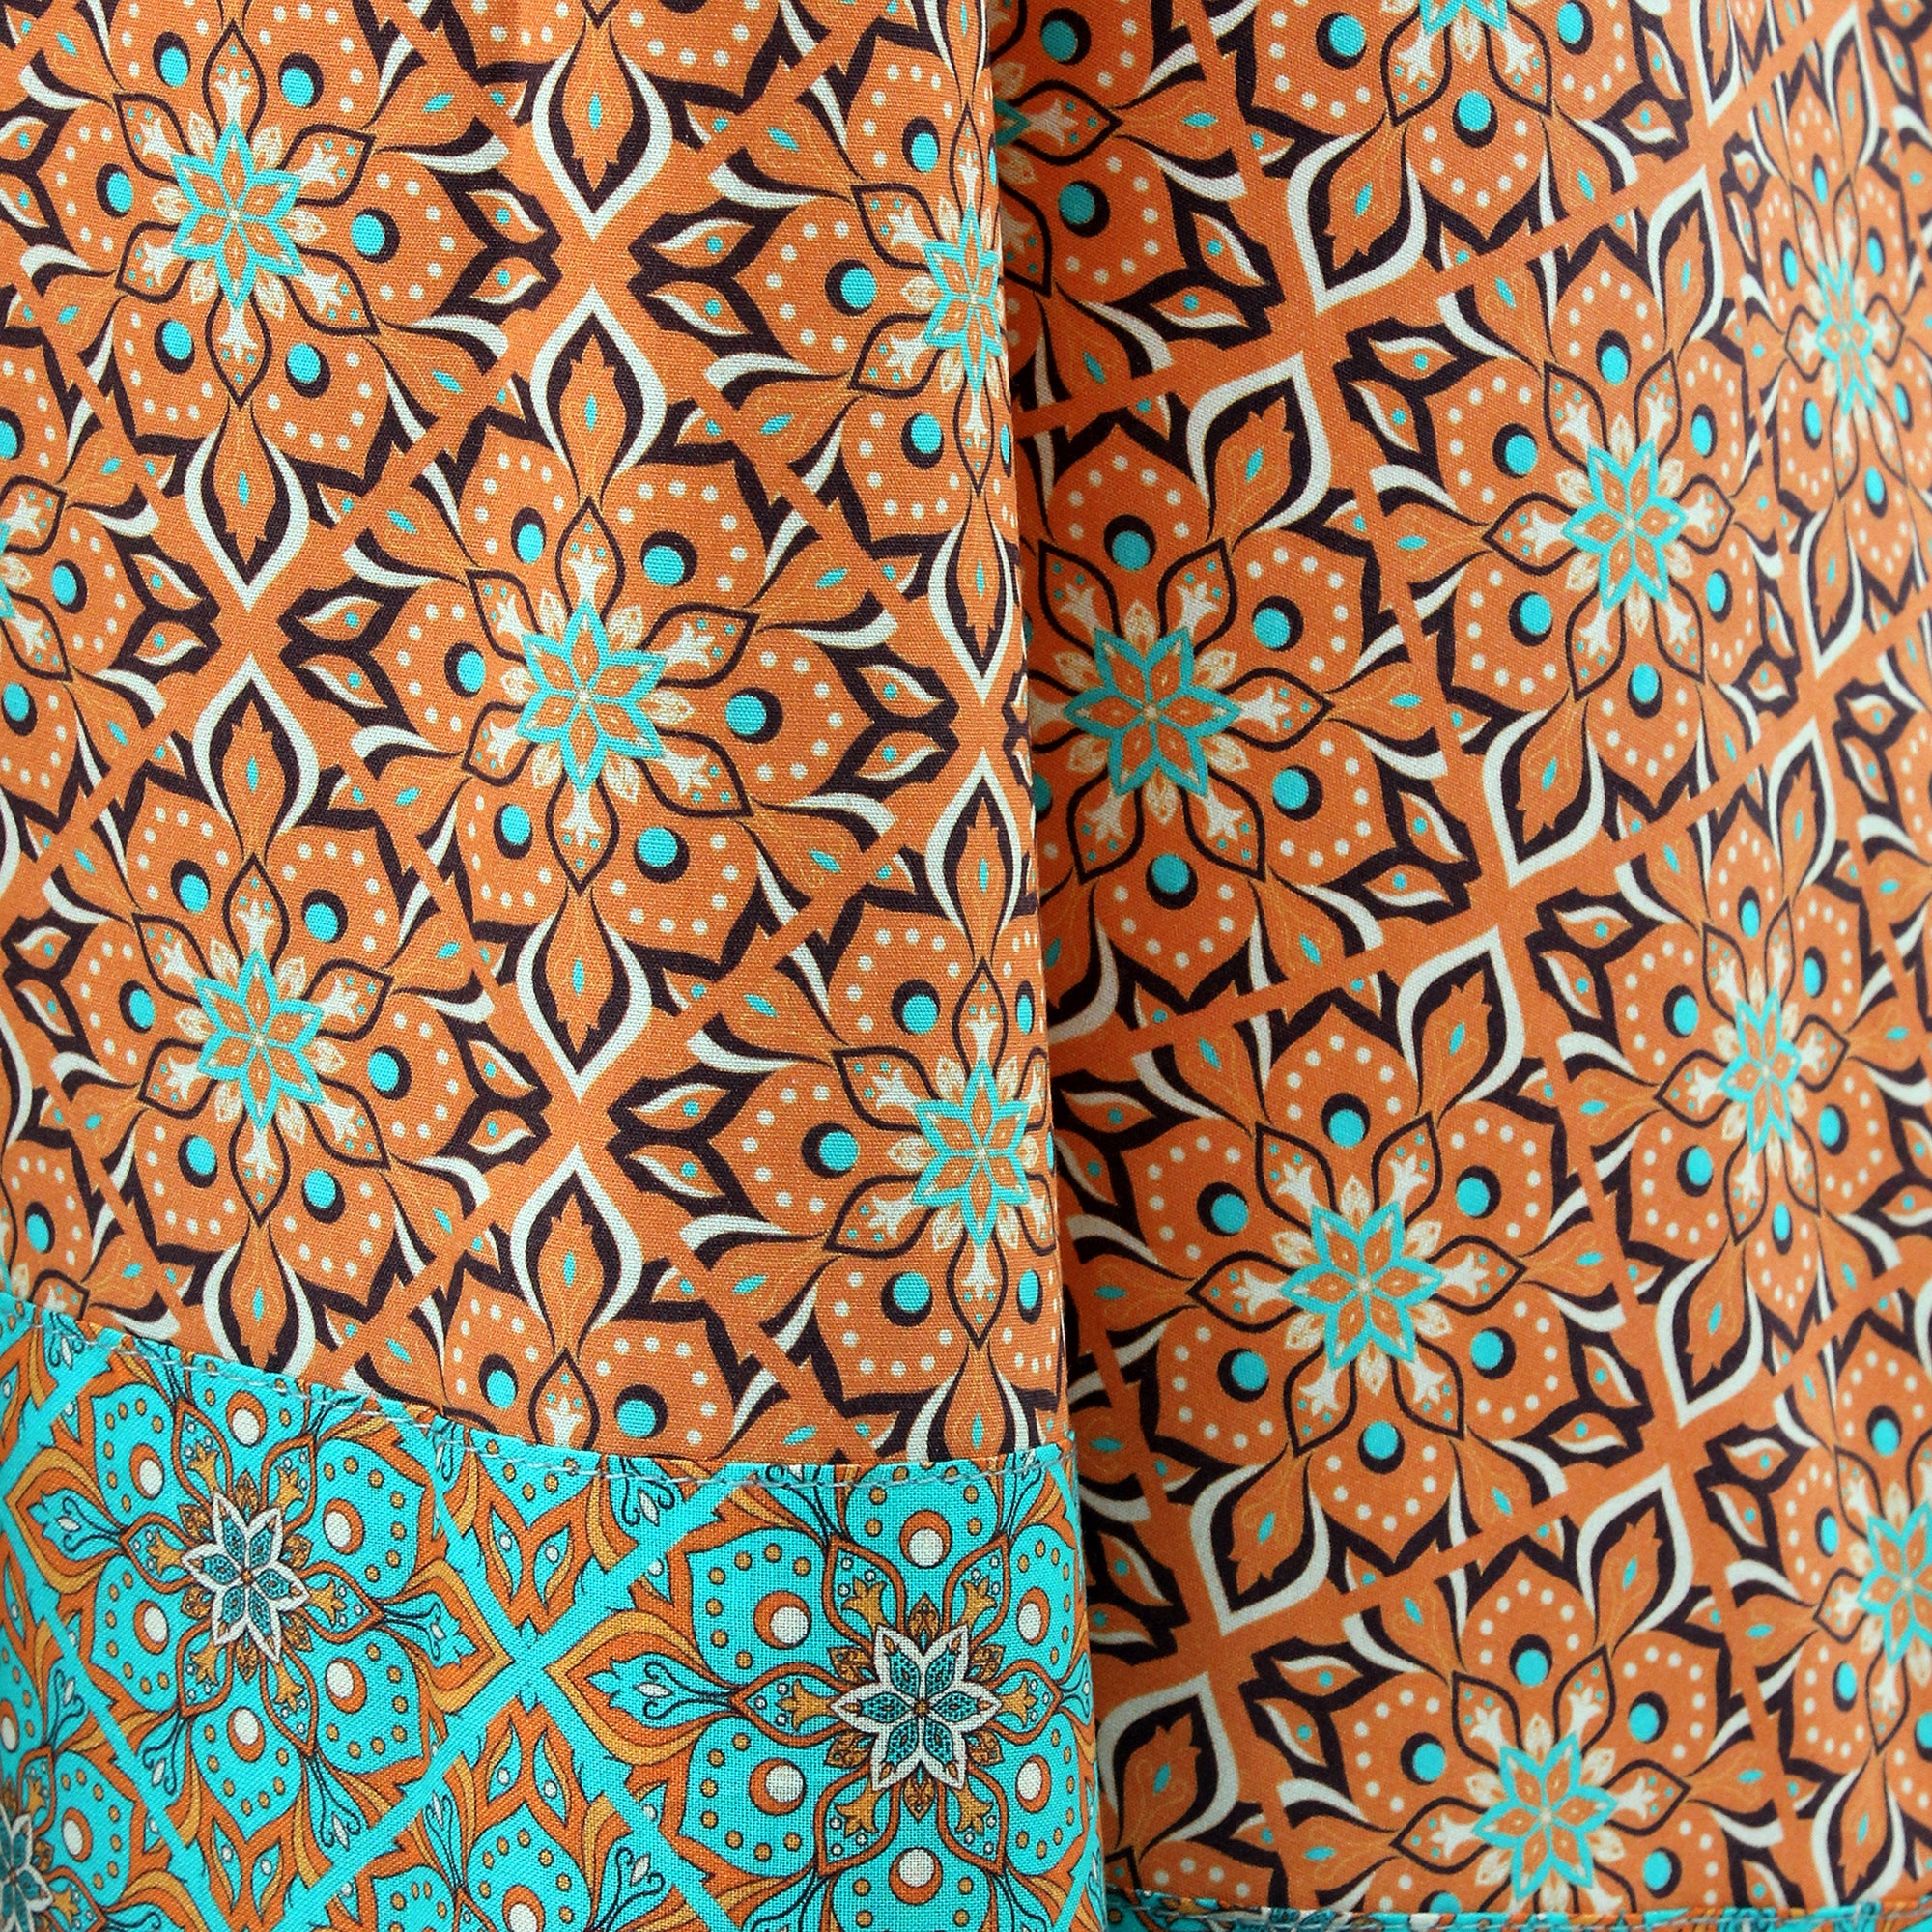 Orange Arabesque Cotton Kaftan Dress